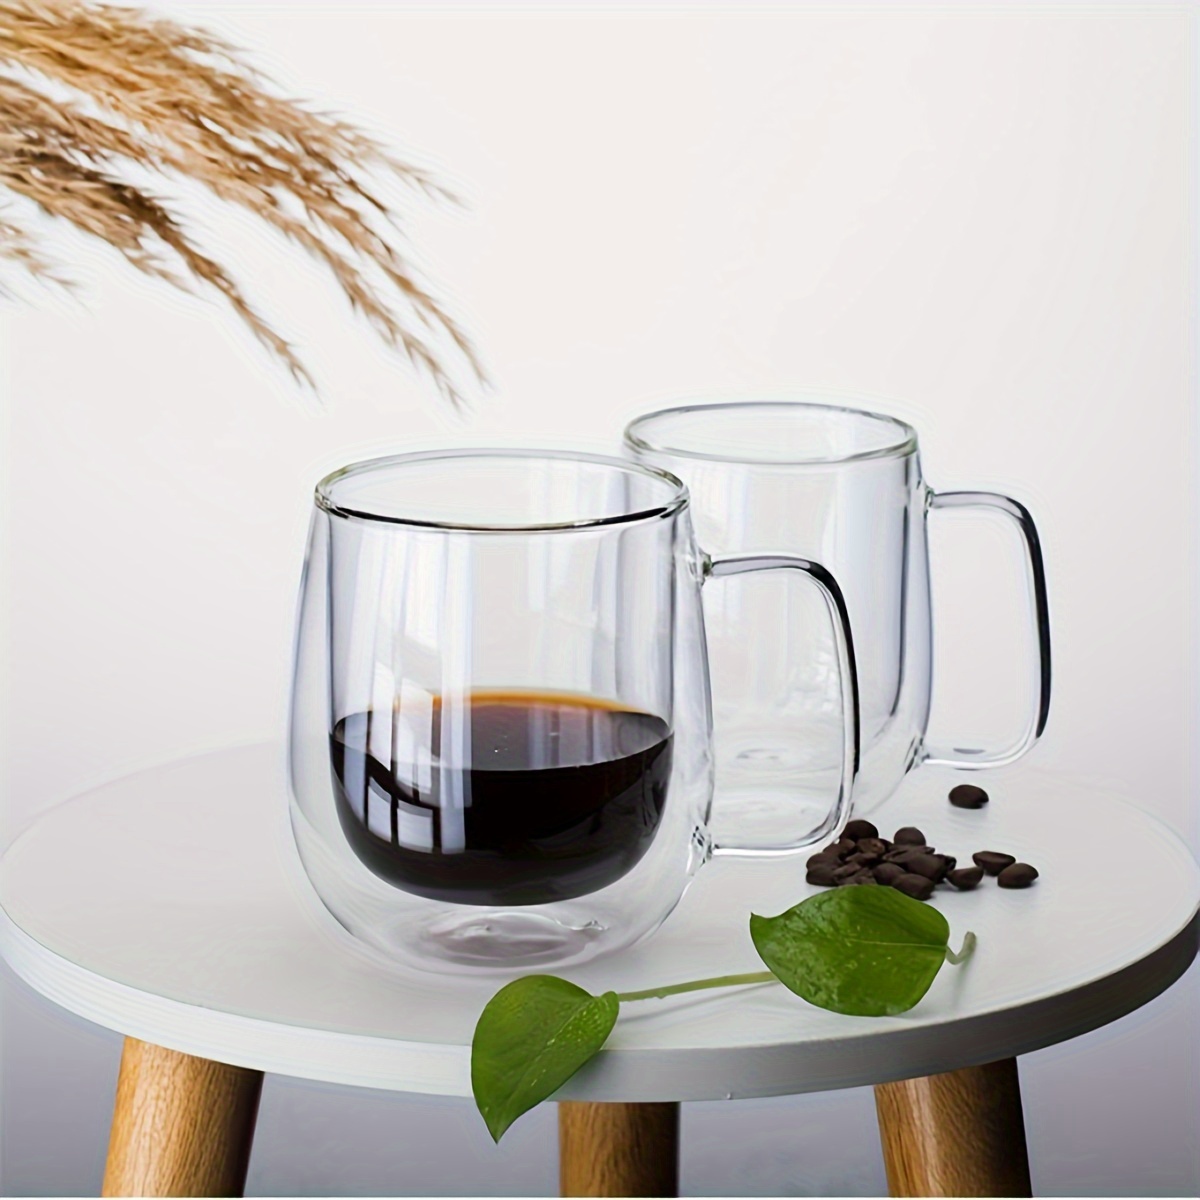 Double Wall Mug, Glass Mugs for Coffee